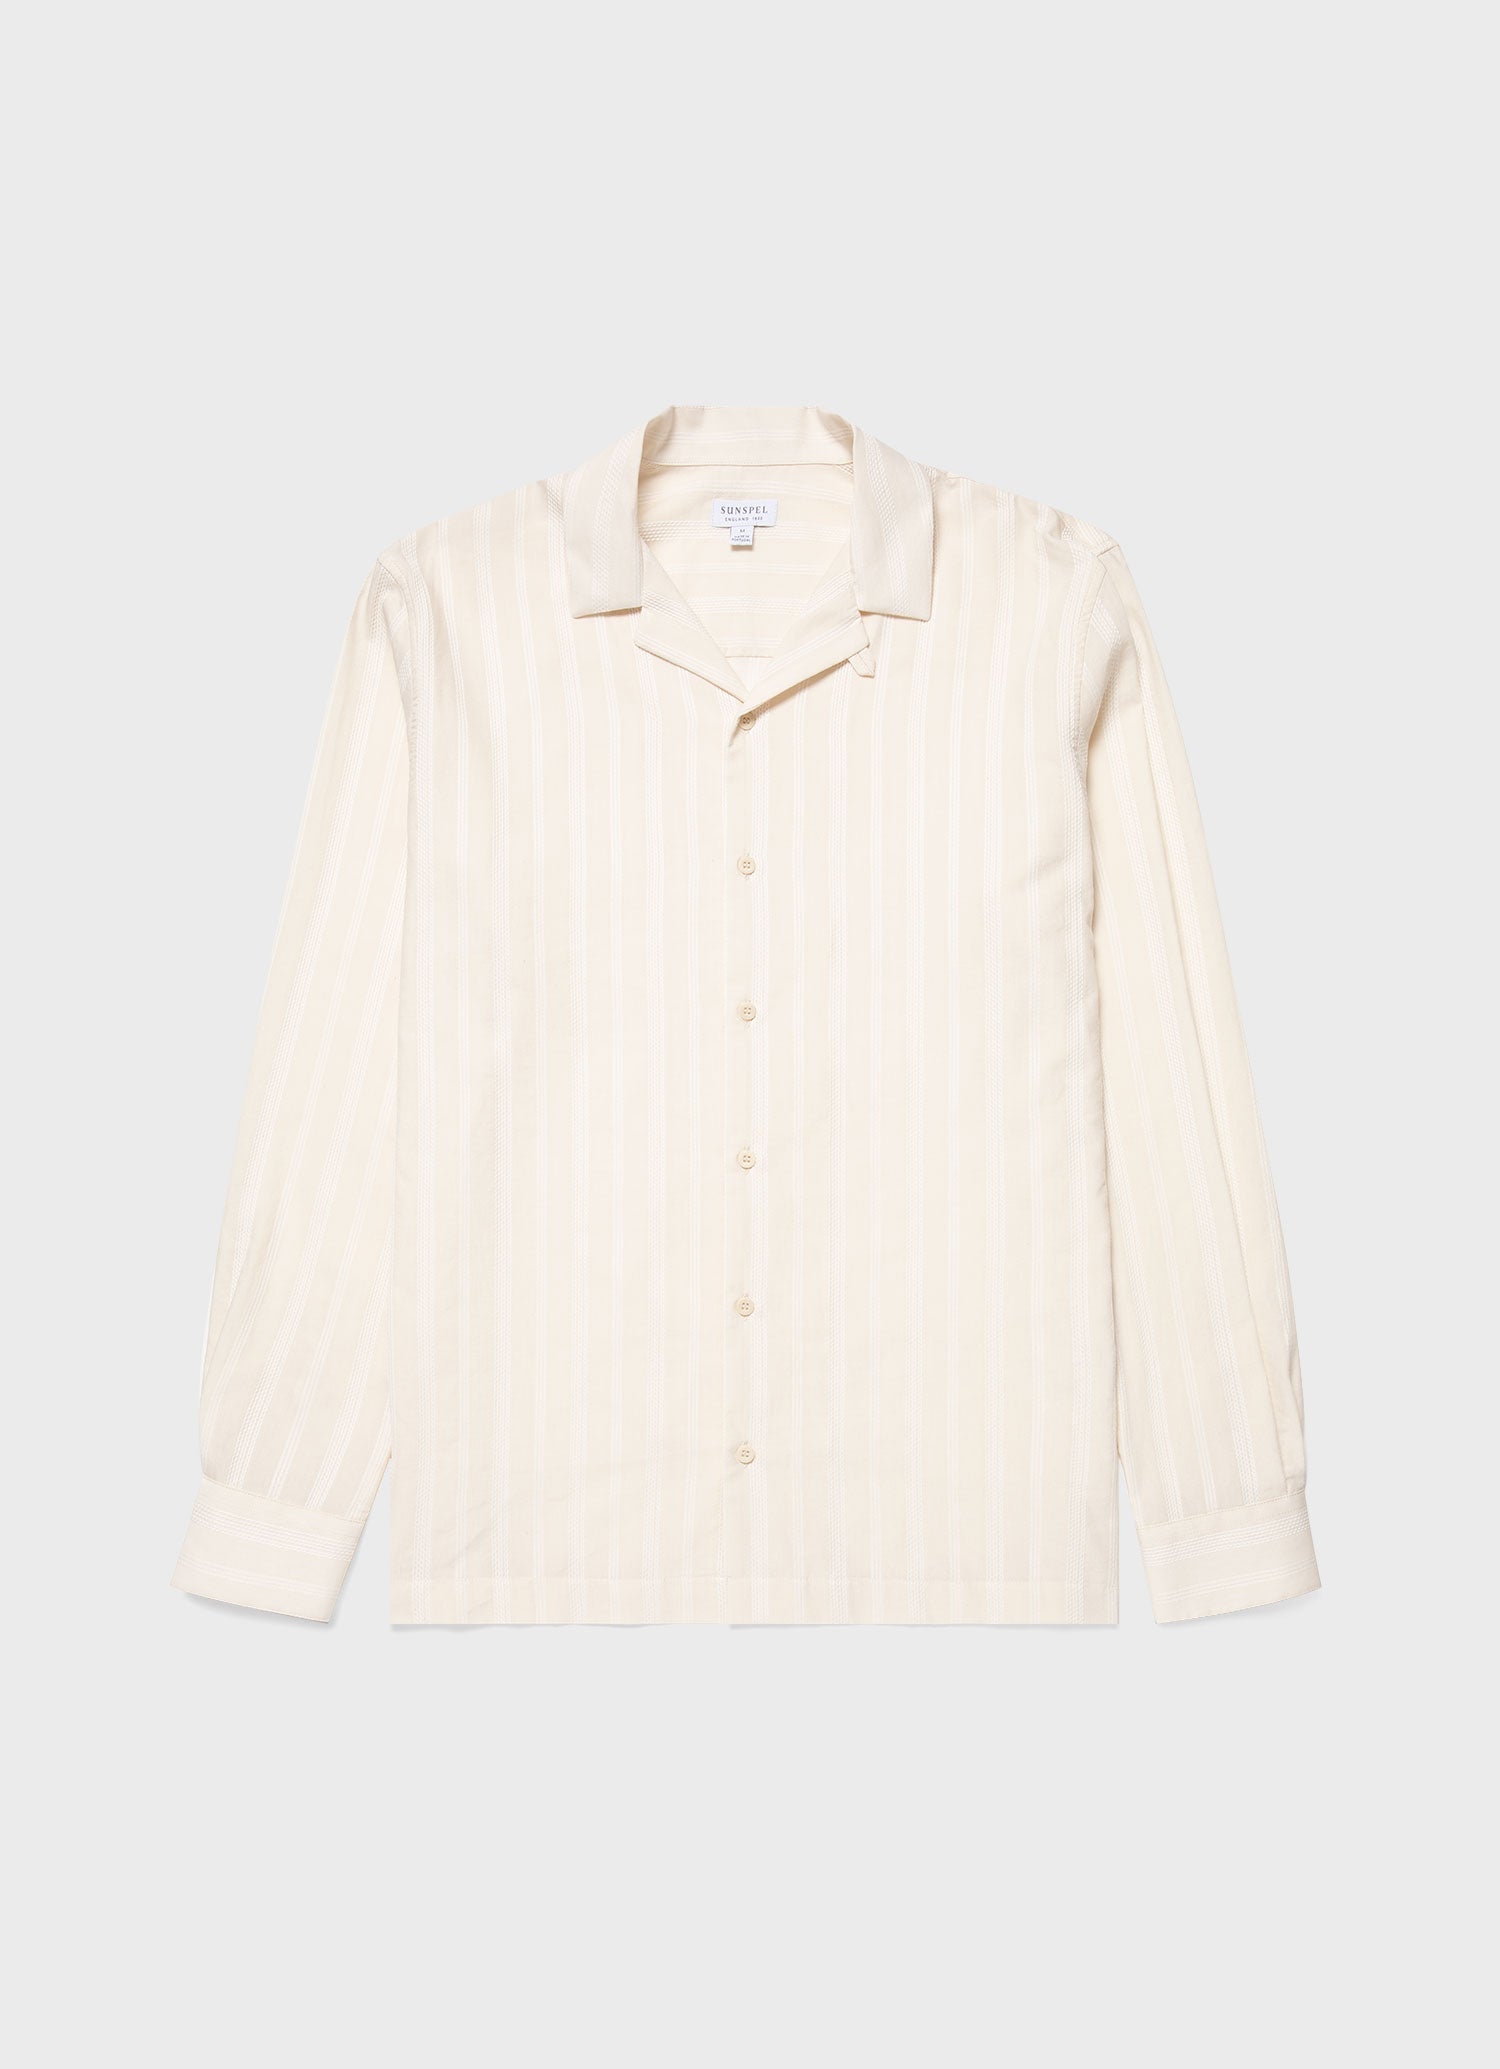 Men's Embroidered Stripe Long Sleeve Shirt in Ecru